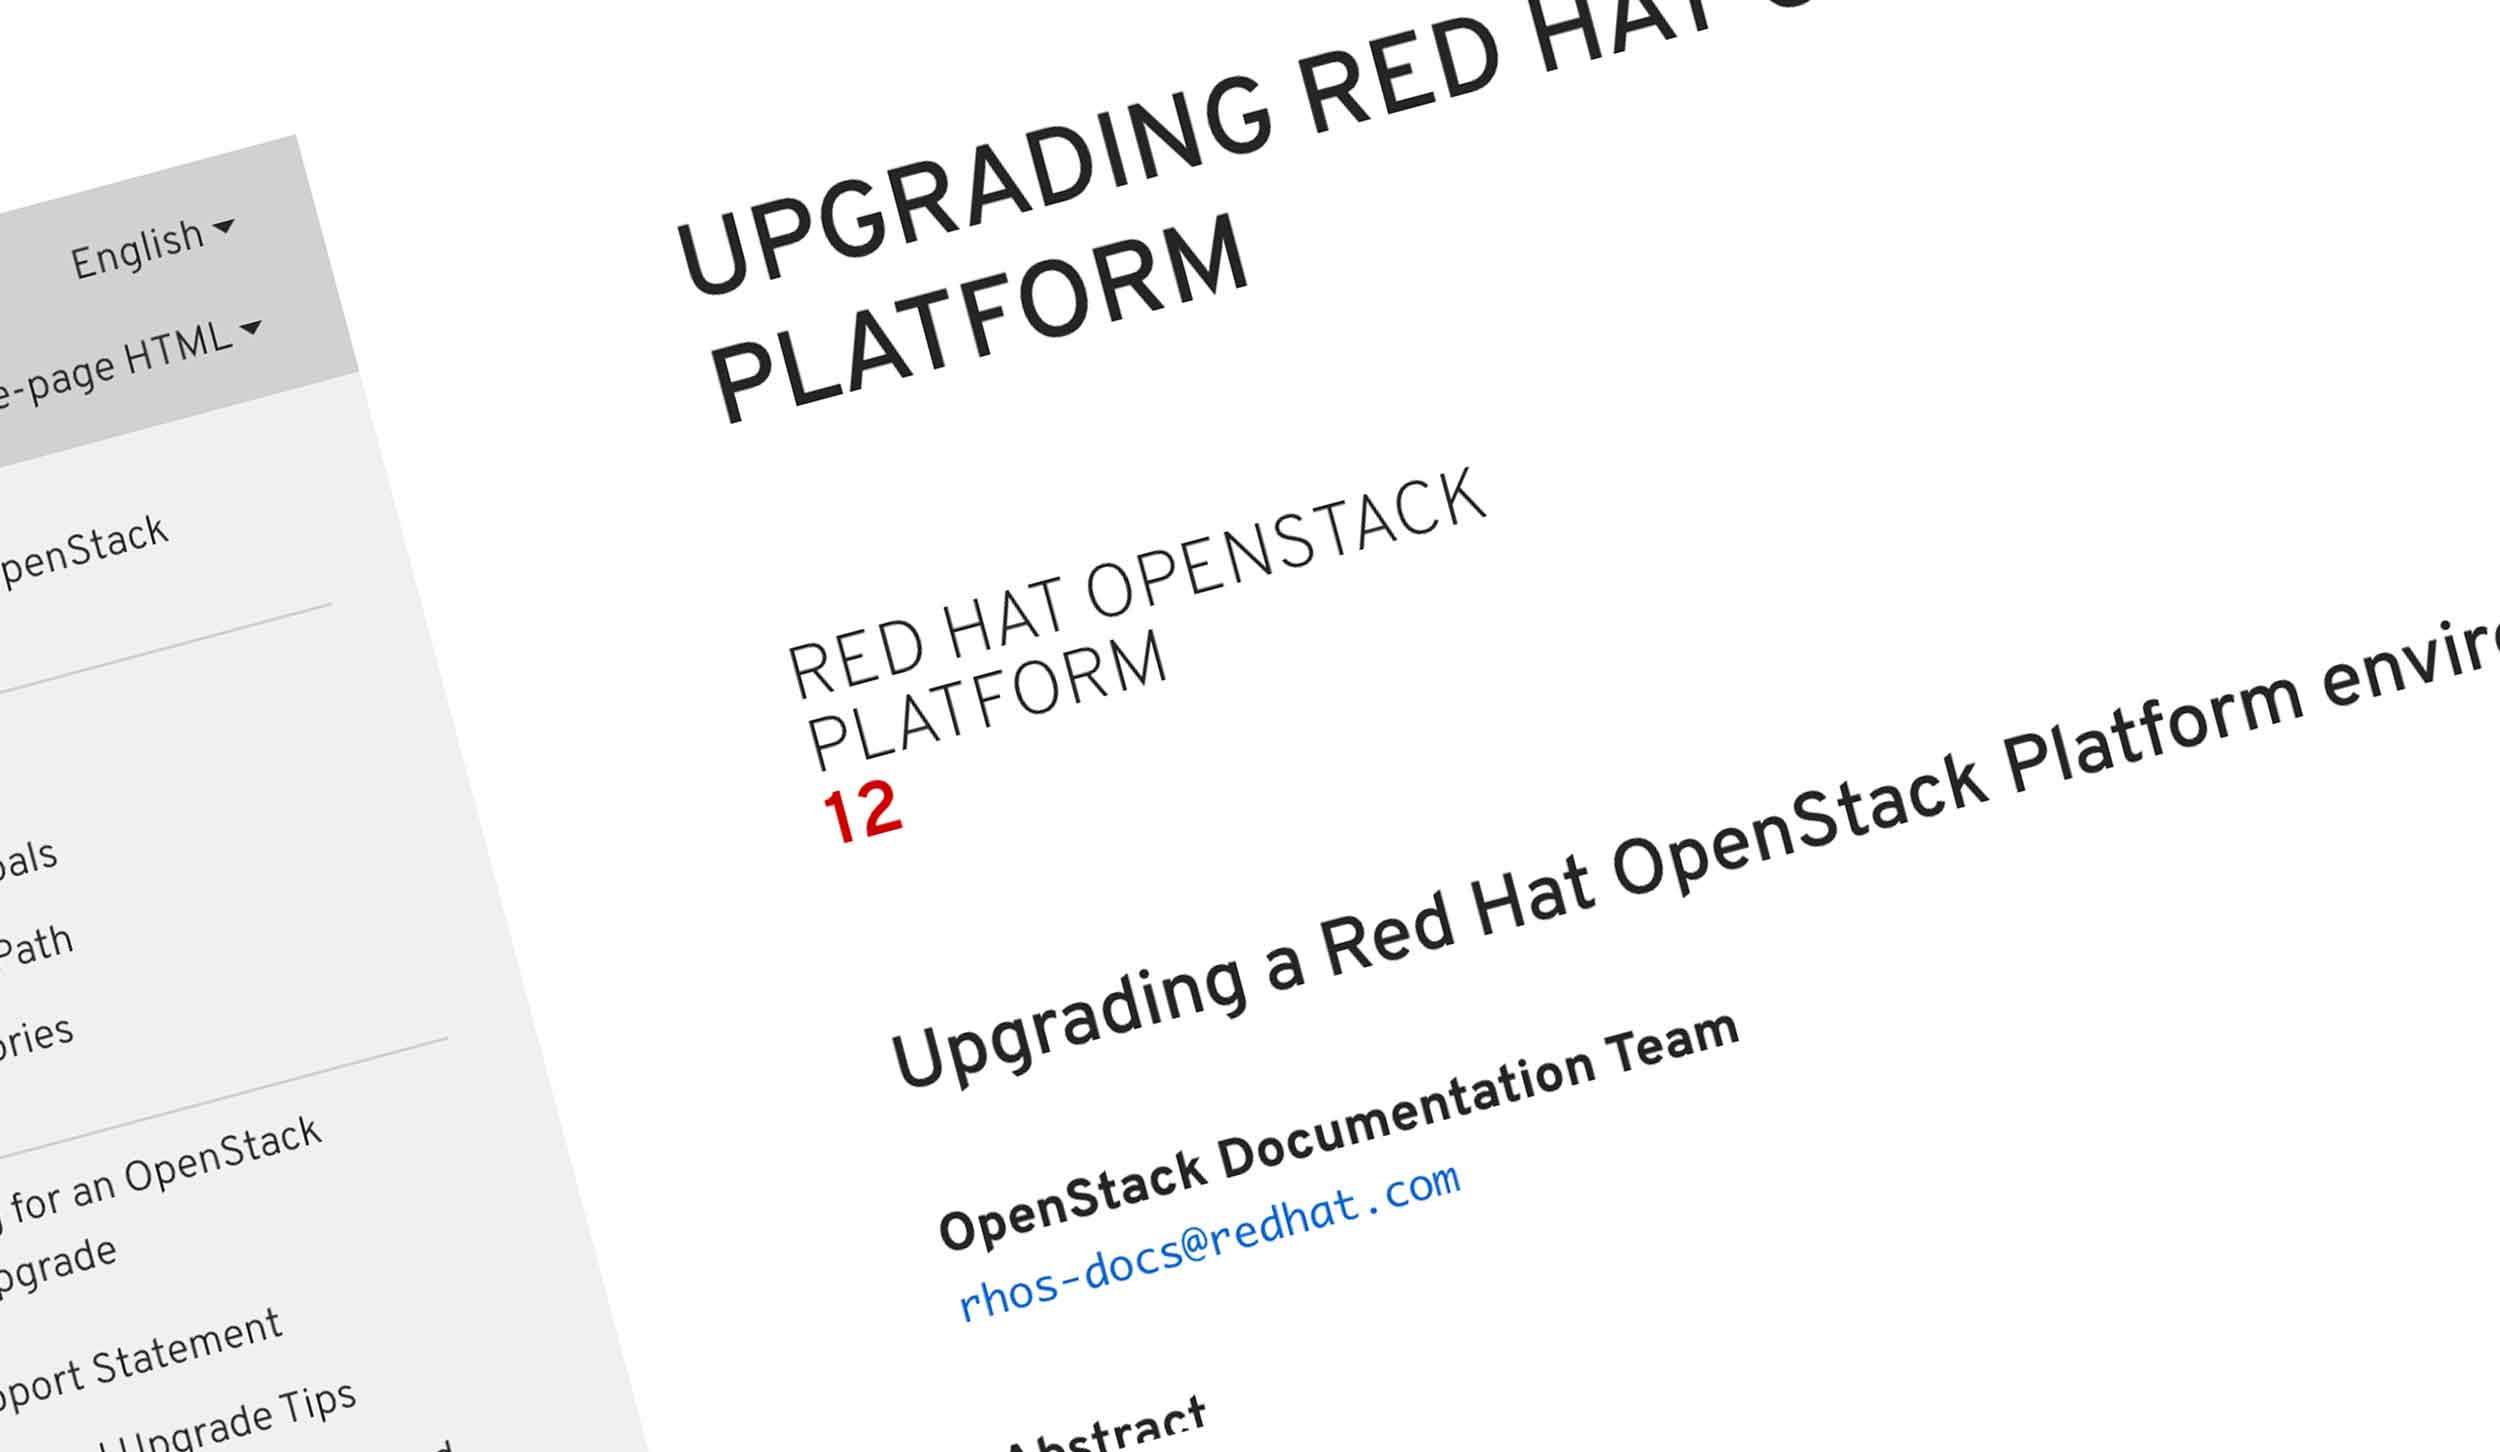 Openstack Upgrade Validation Steps added to Upgrade Documentation